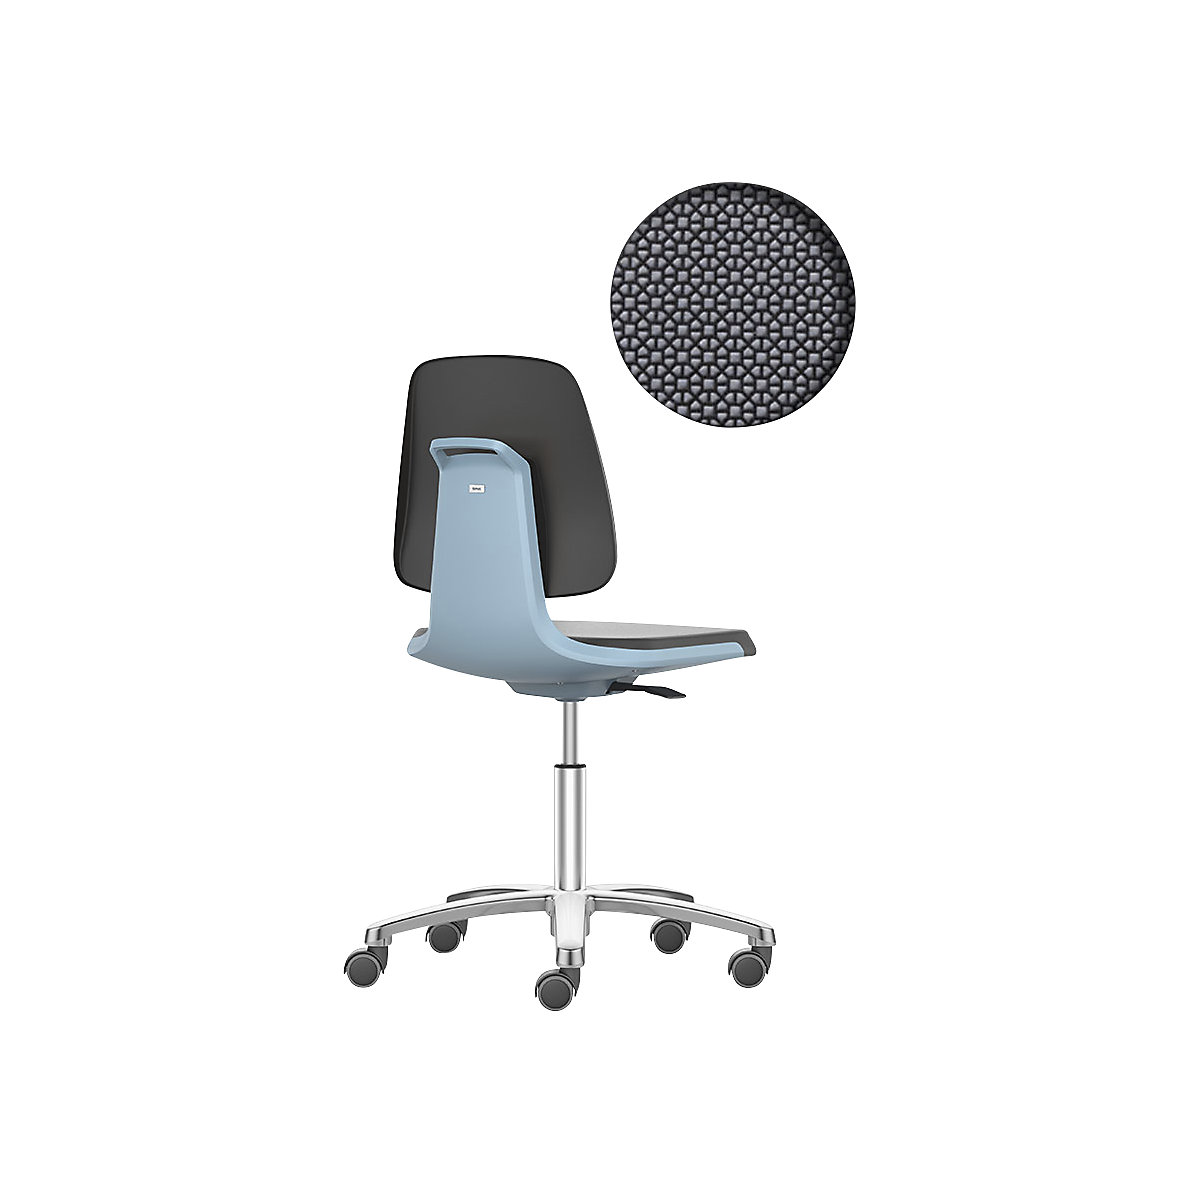 LABSIT industrial swivel chair – bimos, five-star base with castors, Supertec seat, blue-19